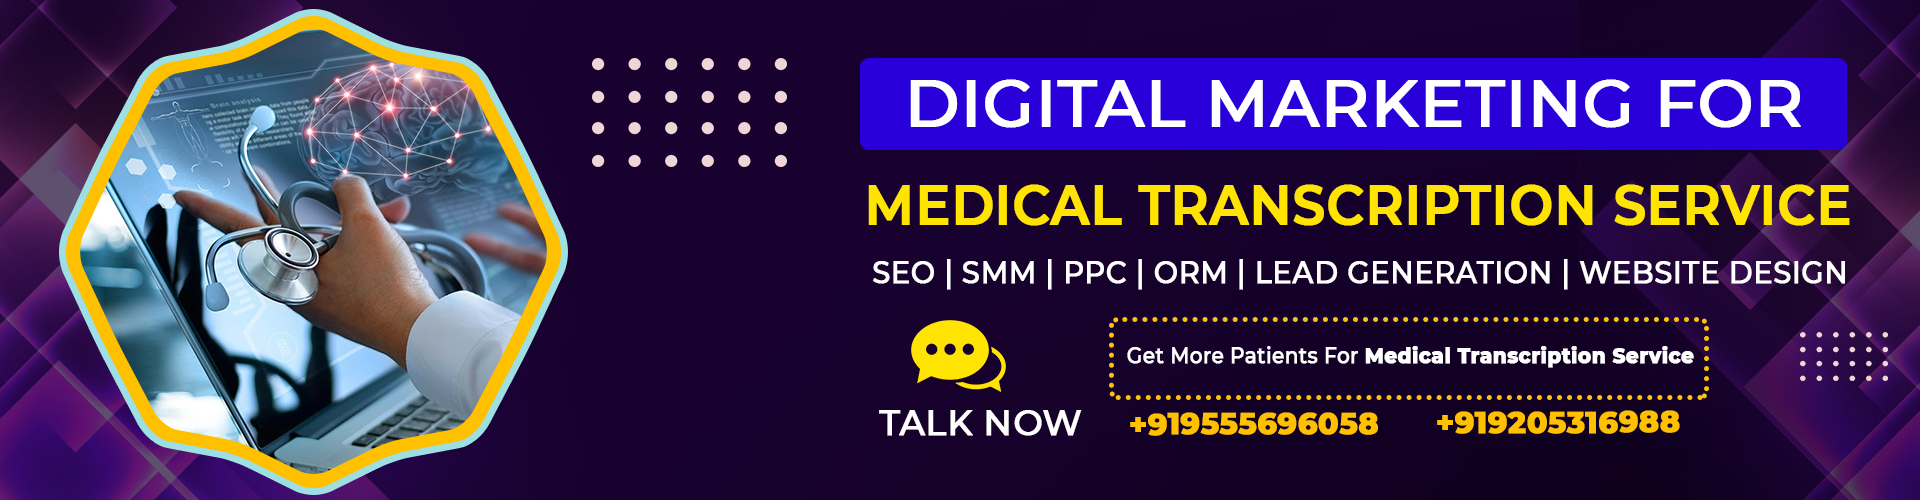 digital-marketing-for-medical-transcription-service